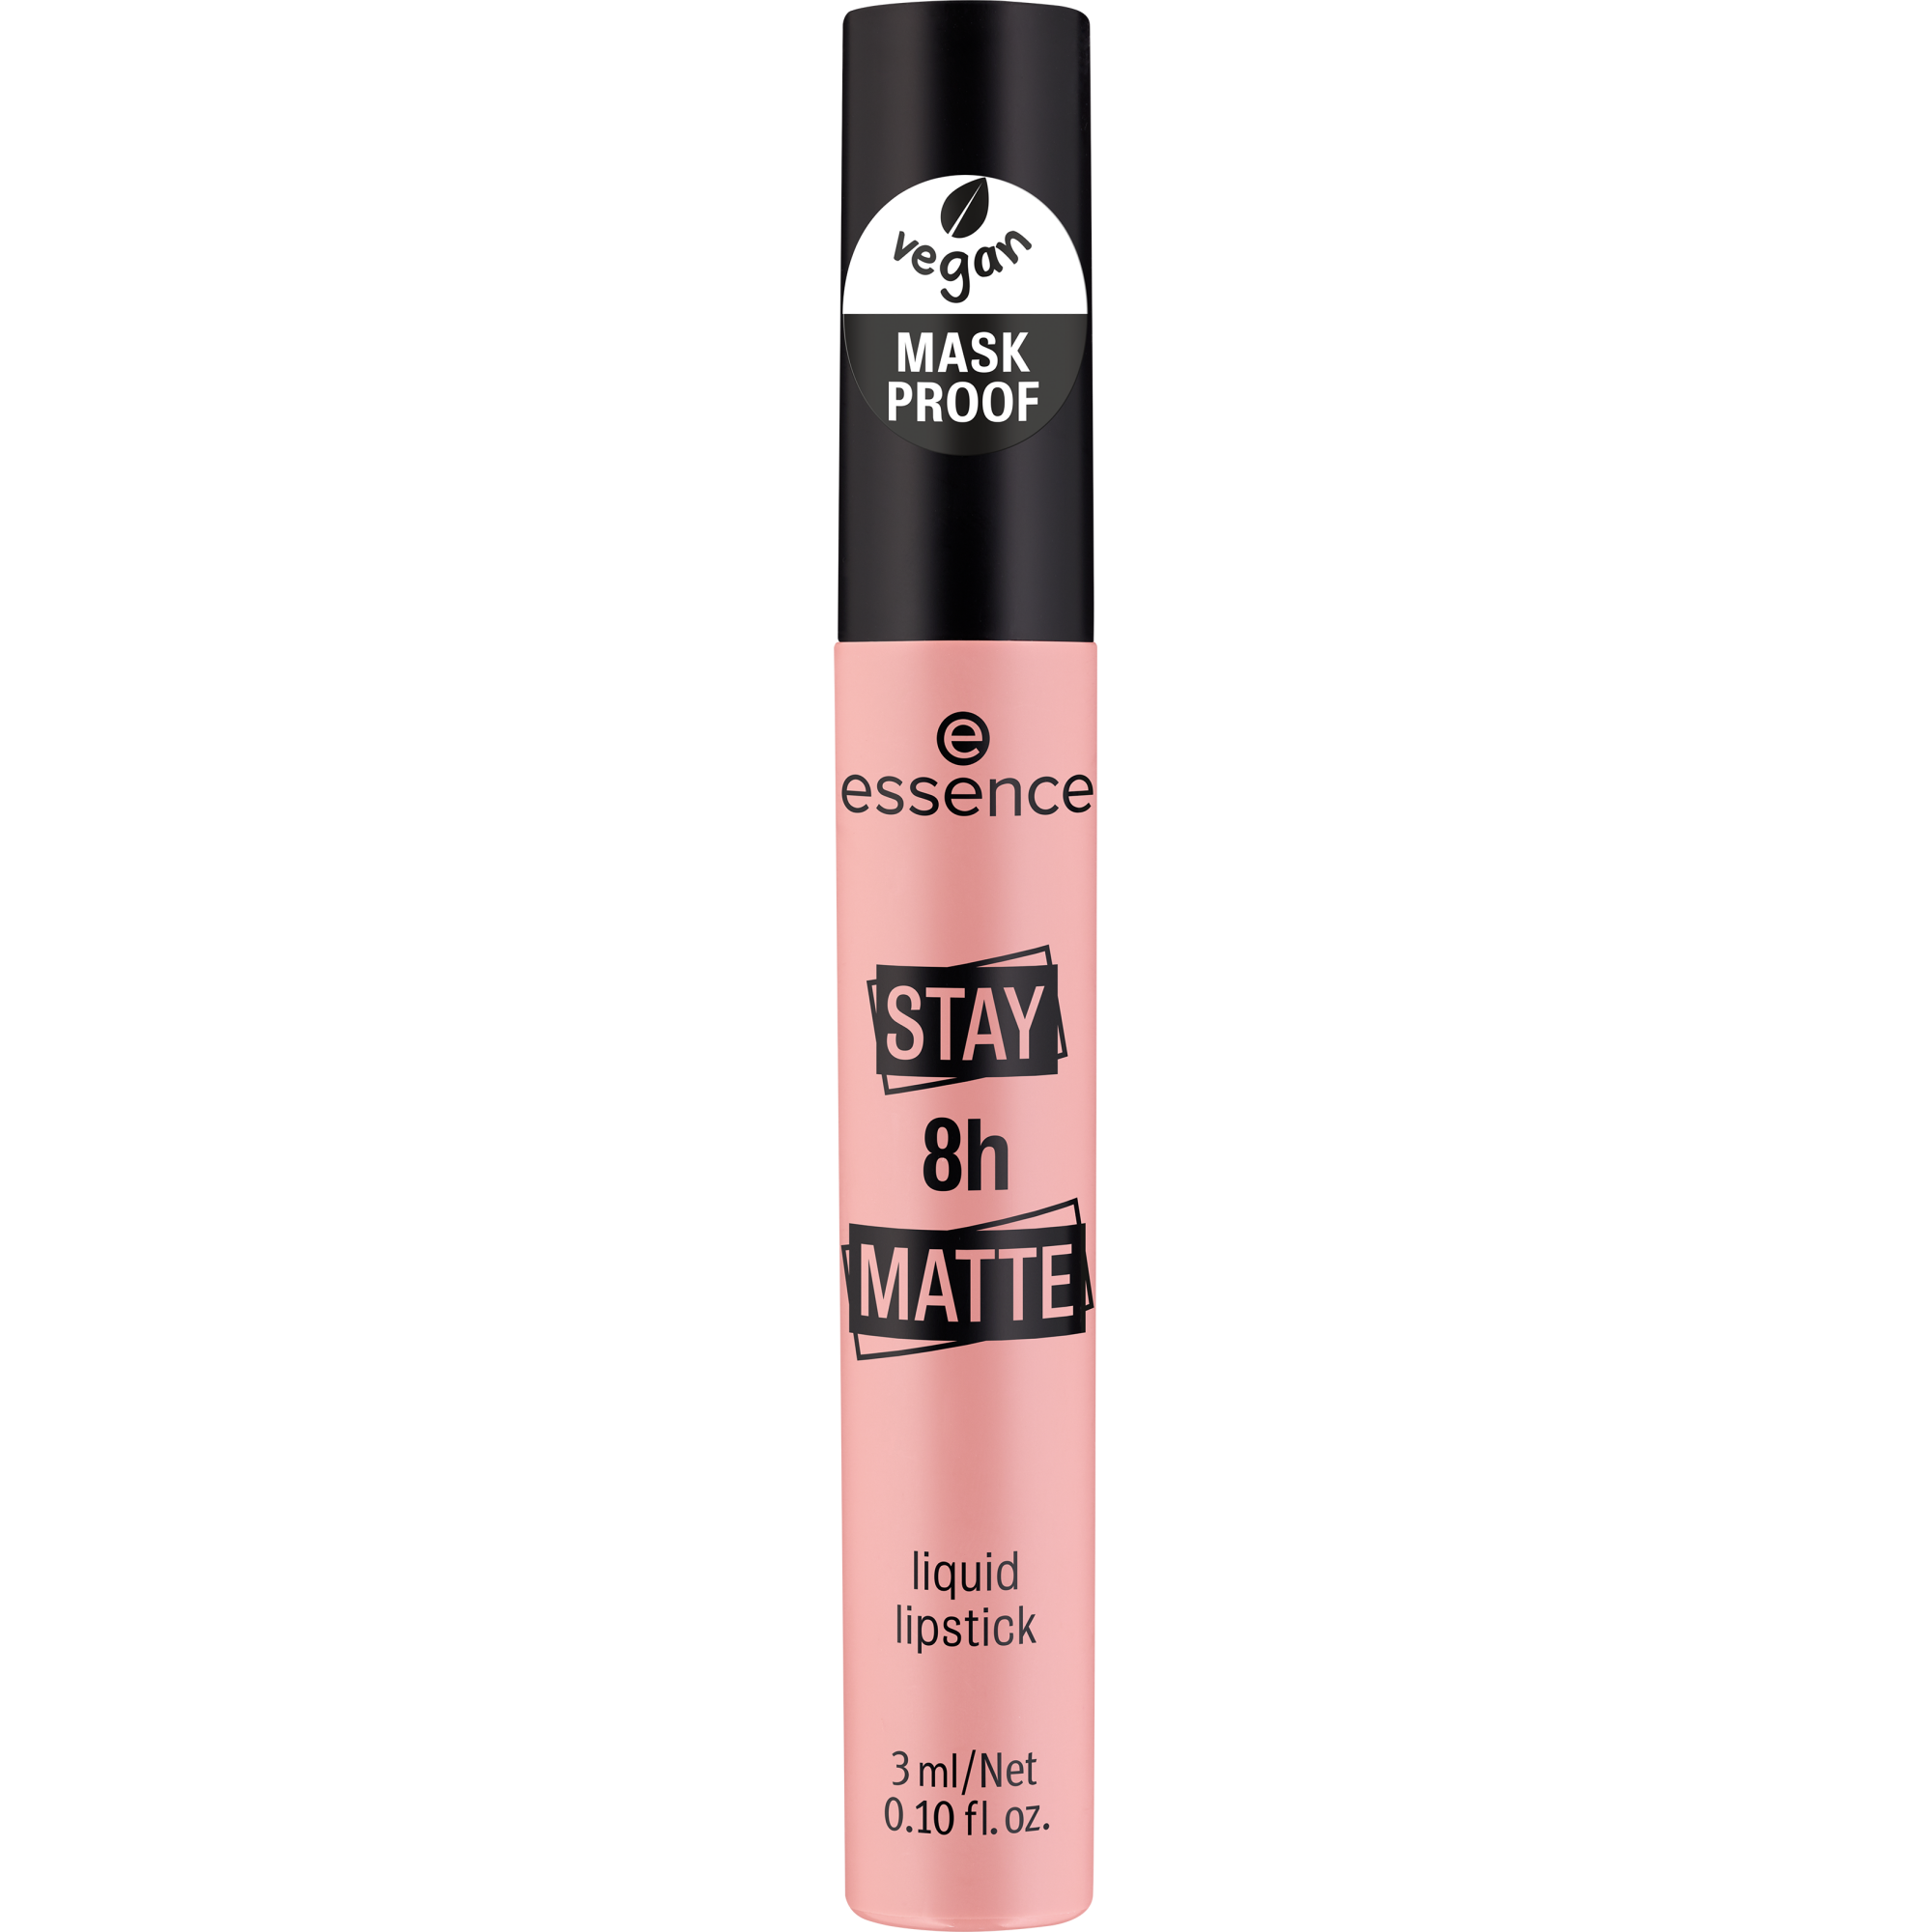 STAY 8h MATTE liquid lipstick